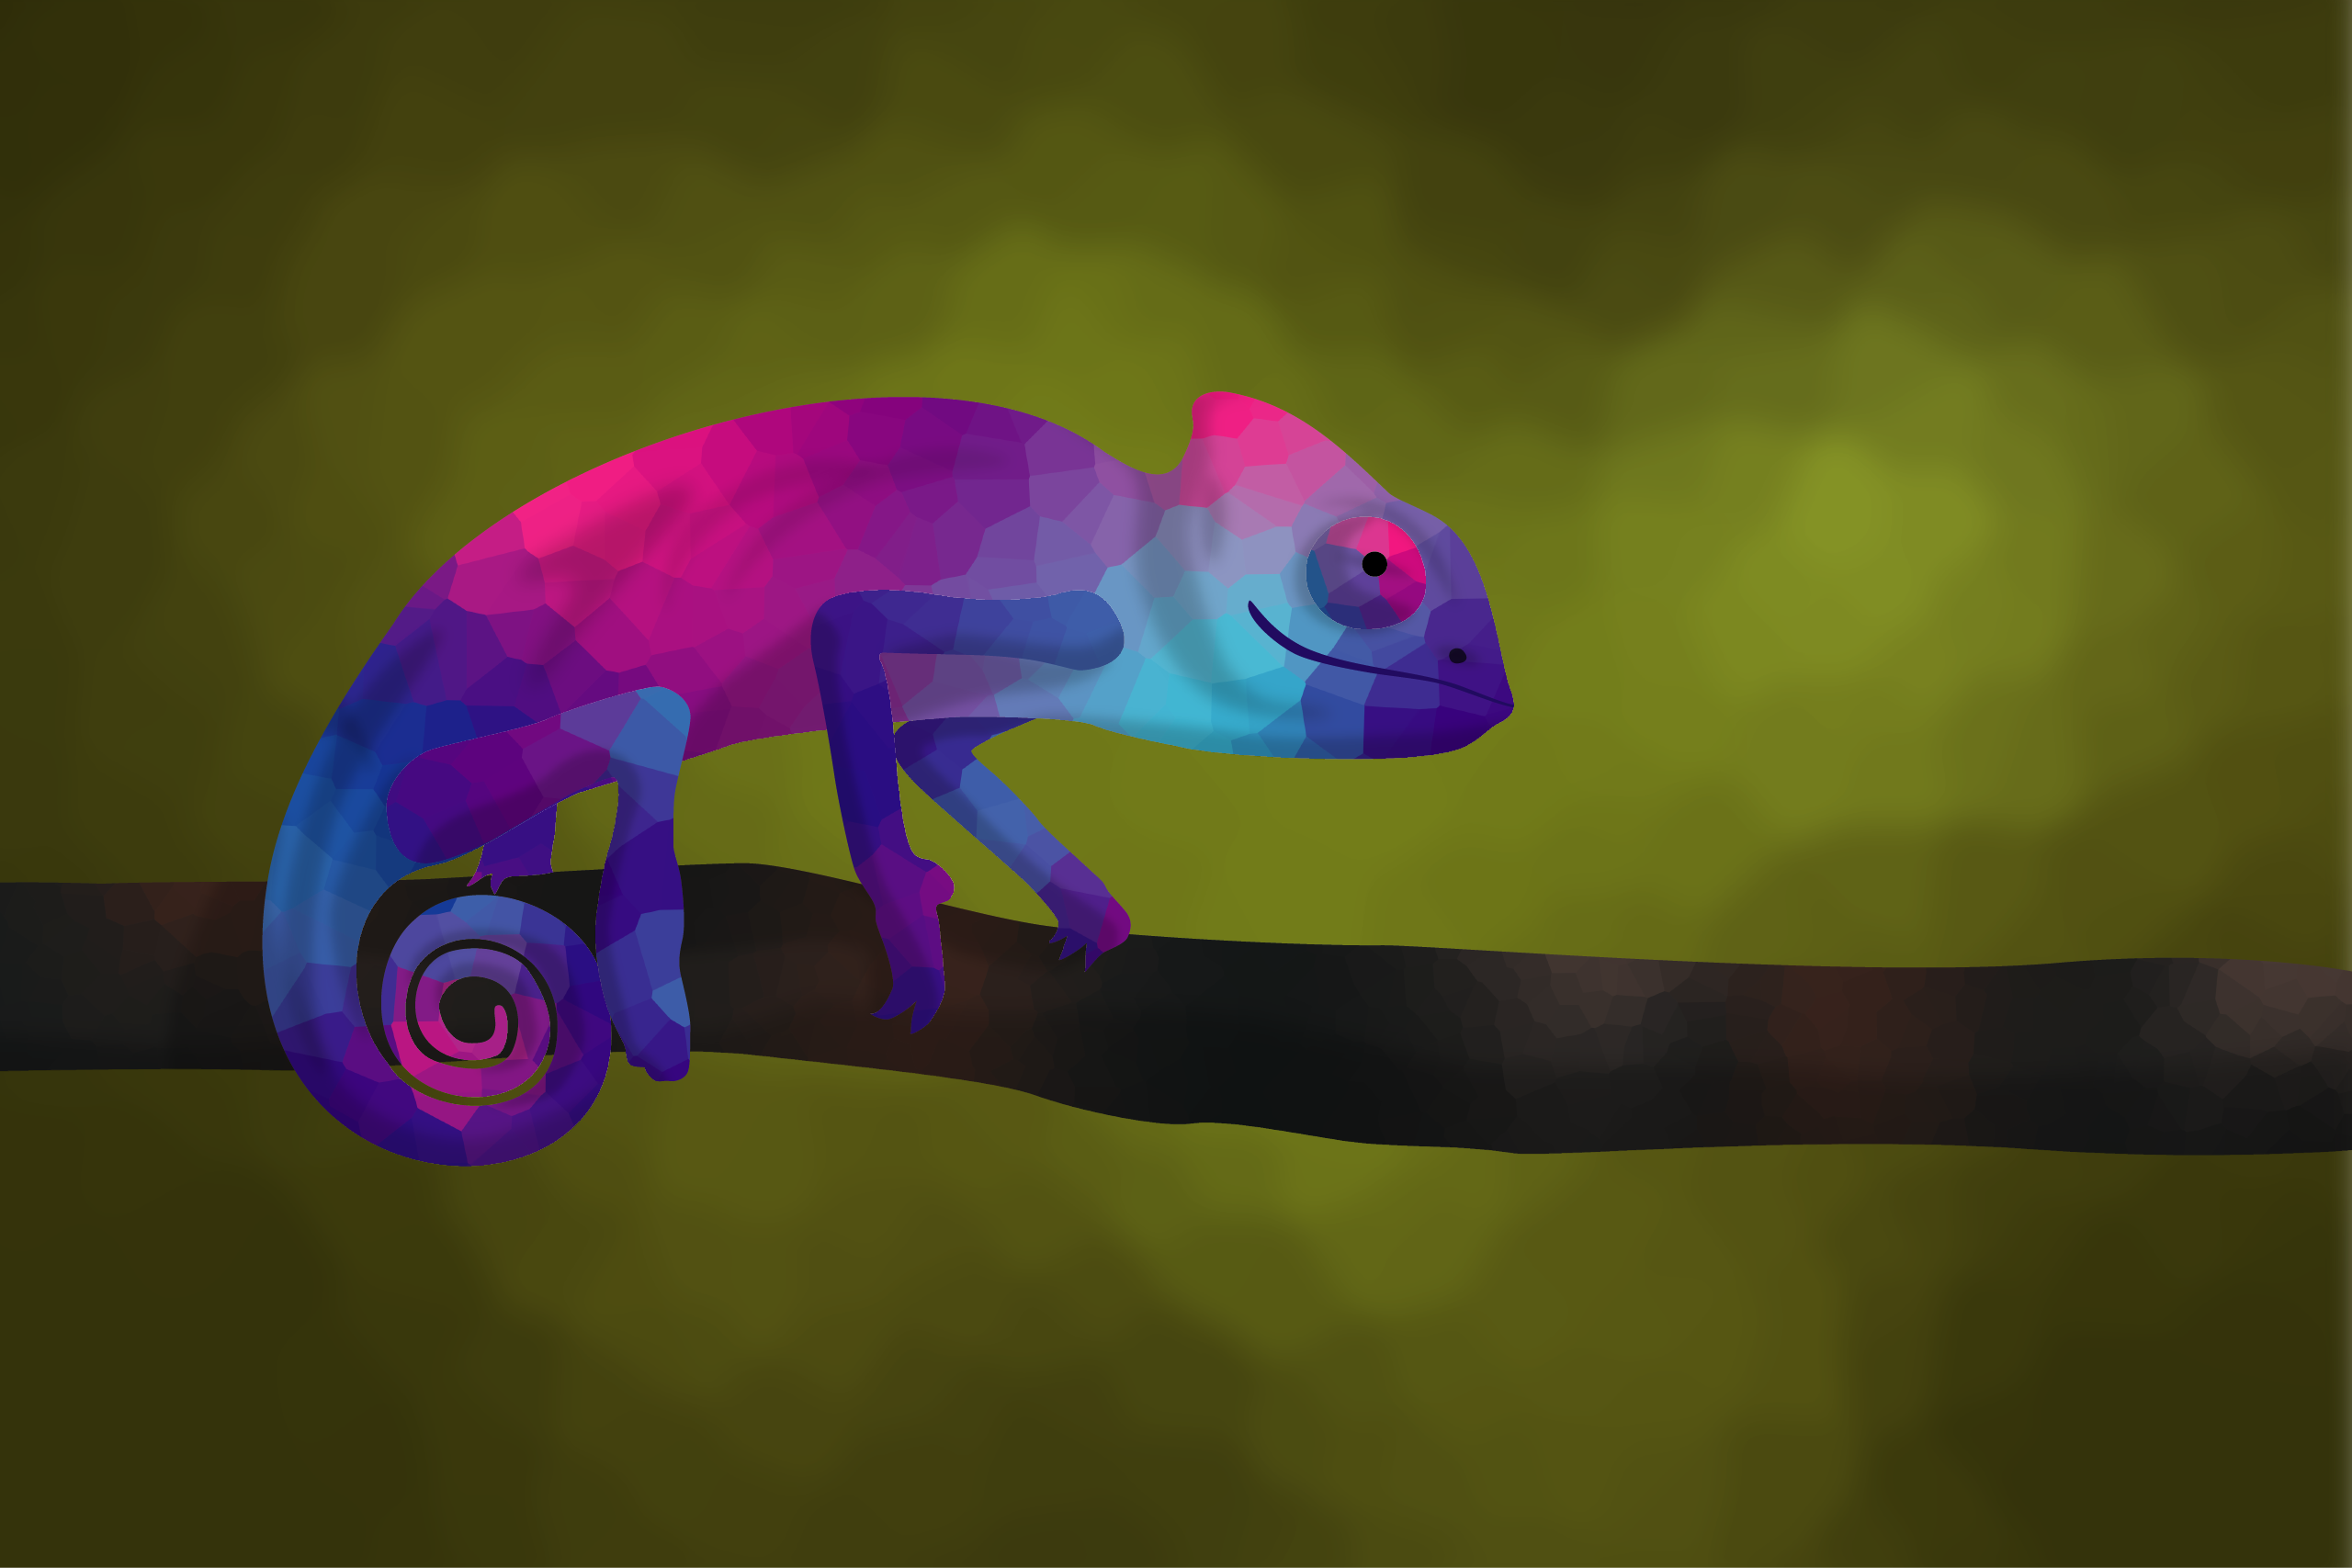 Multifaceted chameleon illustration by Xavier Wendling